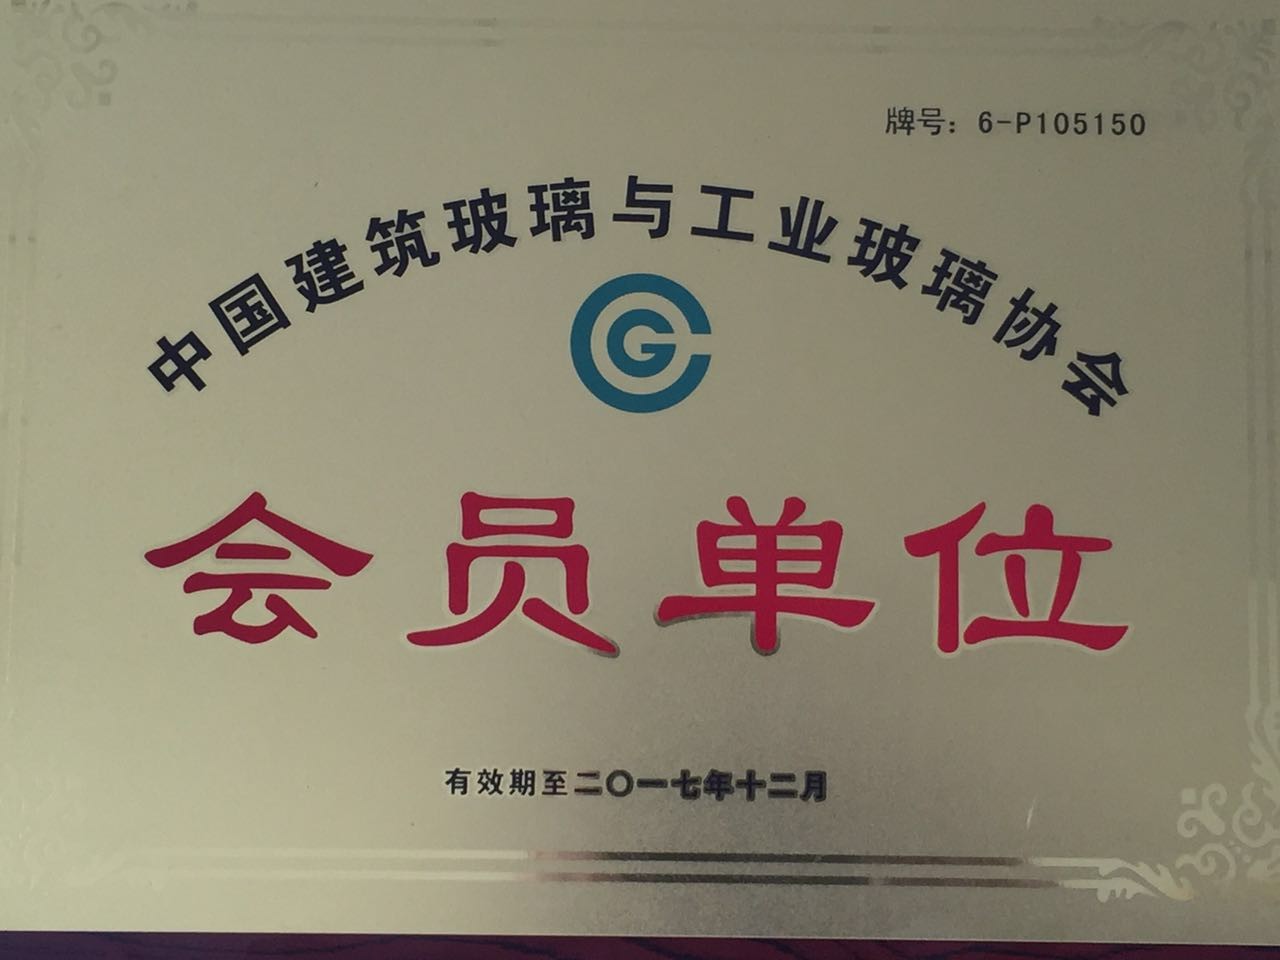 Jinan Lijiang Automation Equipment Co., Ltd. Certifications